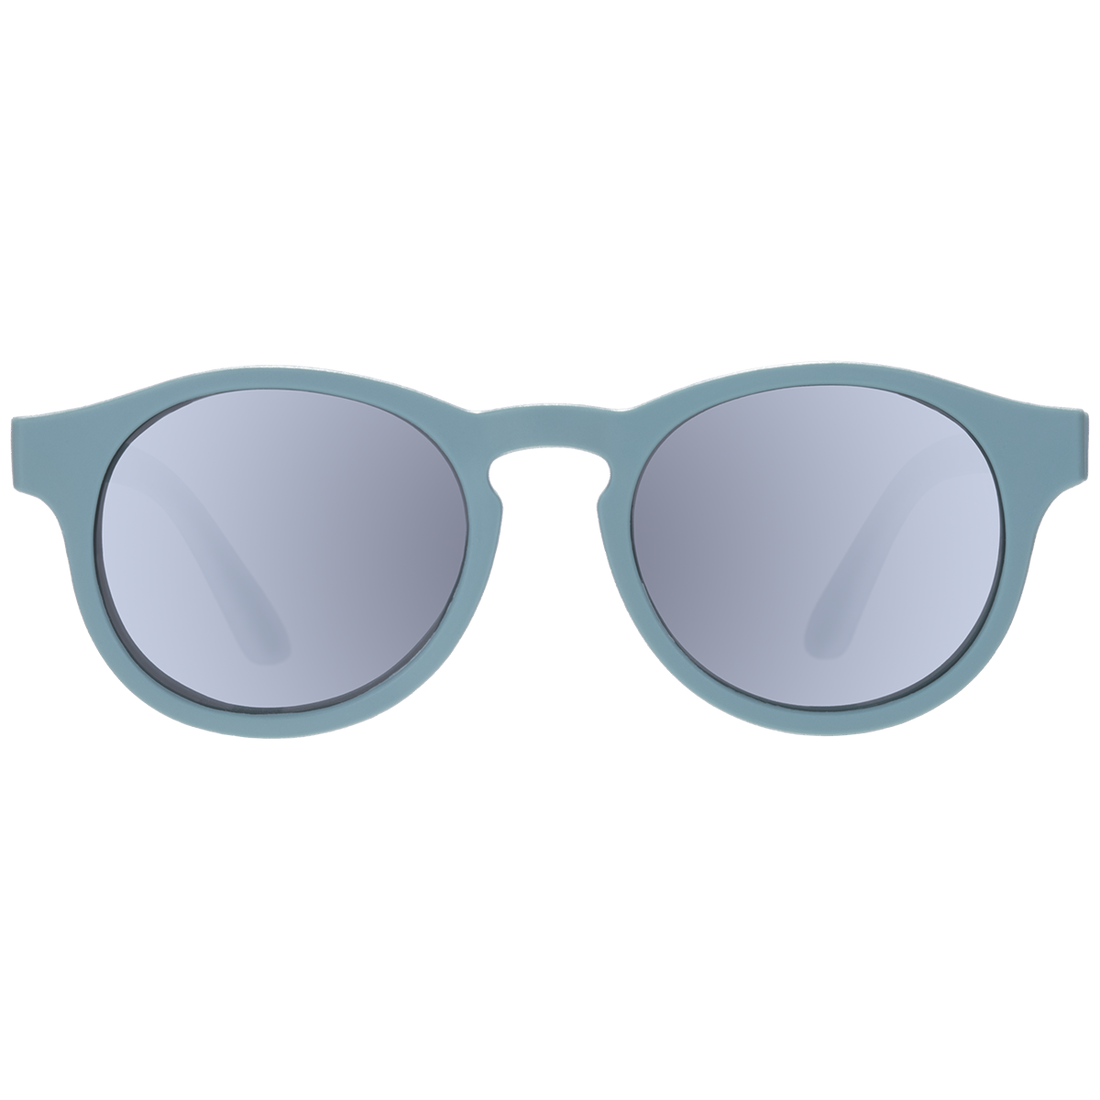 The Seafarer - Polarized with Mirrored Lenses Babiator Sunglasses